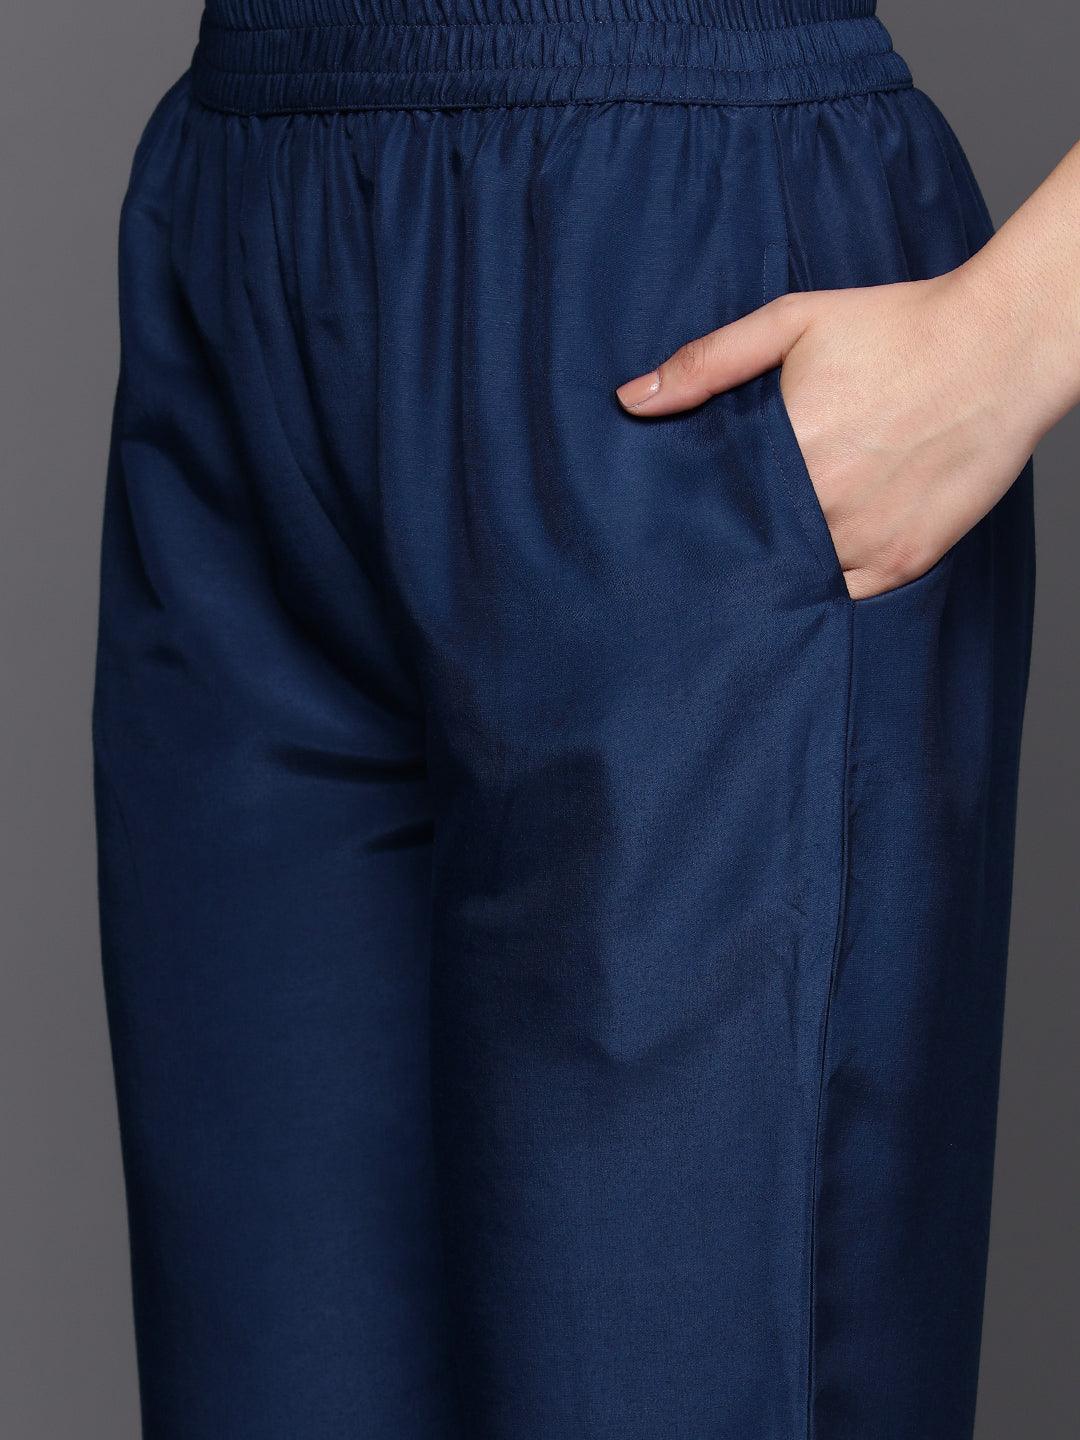 Blue Self Design Silk Blend Straight Kurta With Trousers & Dupatta